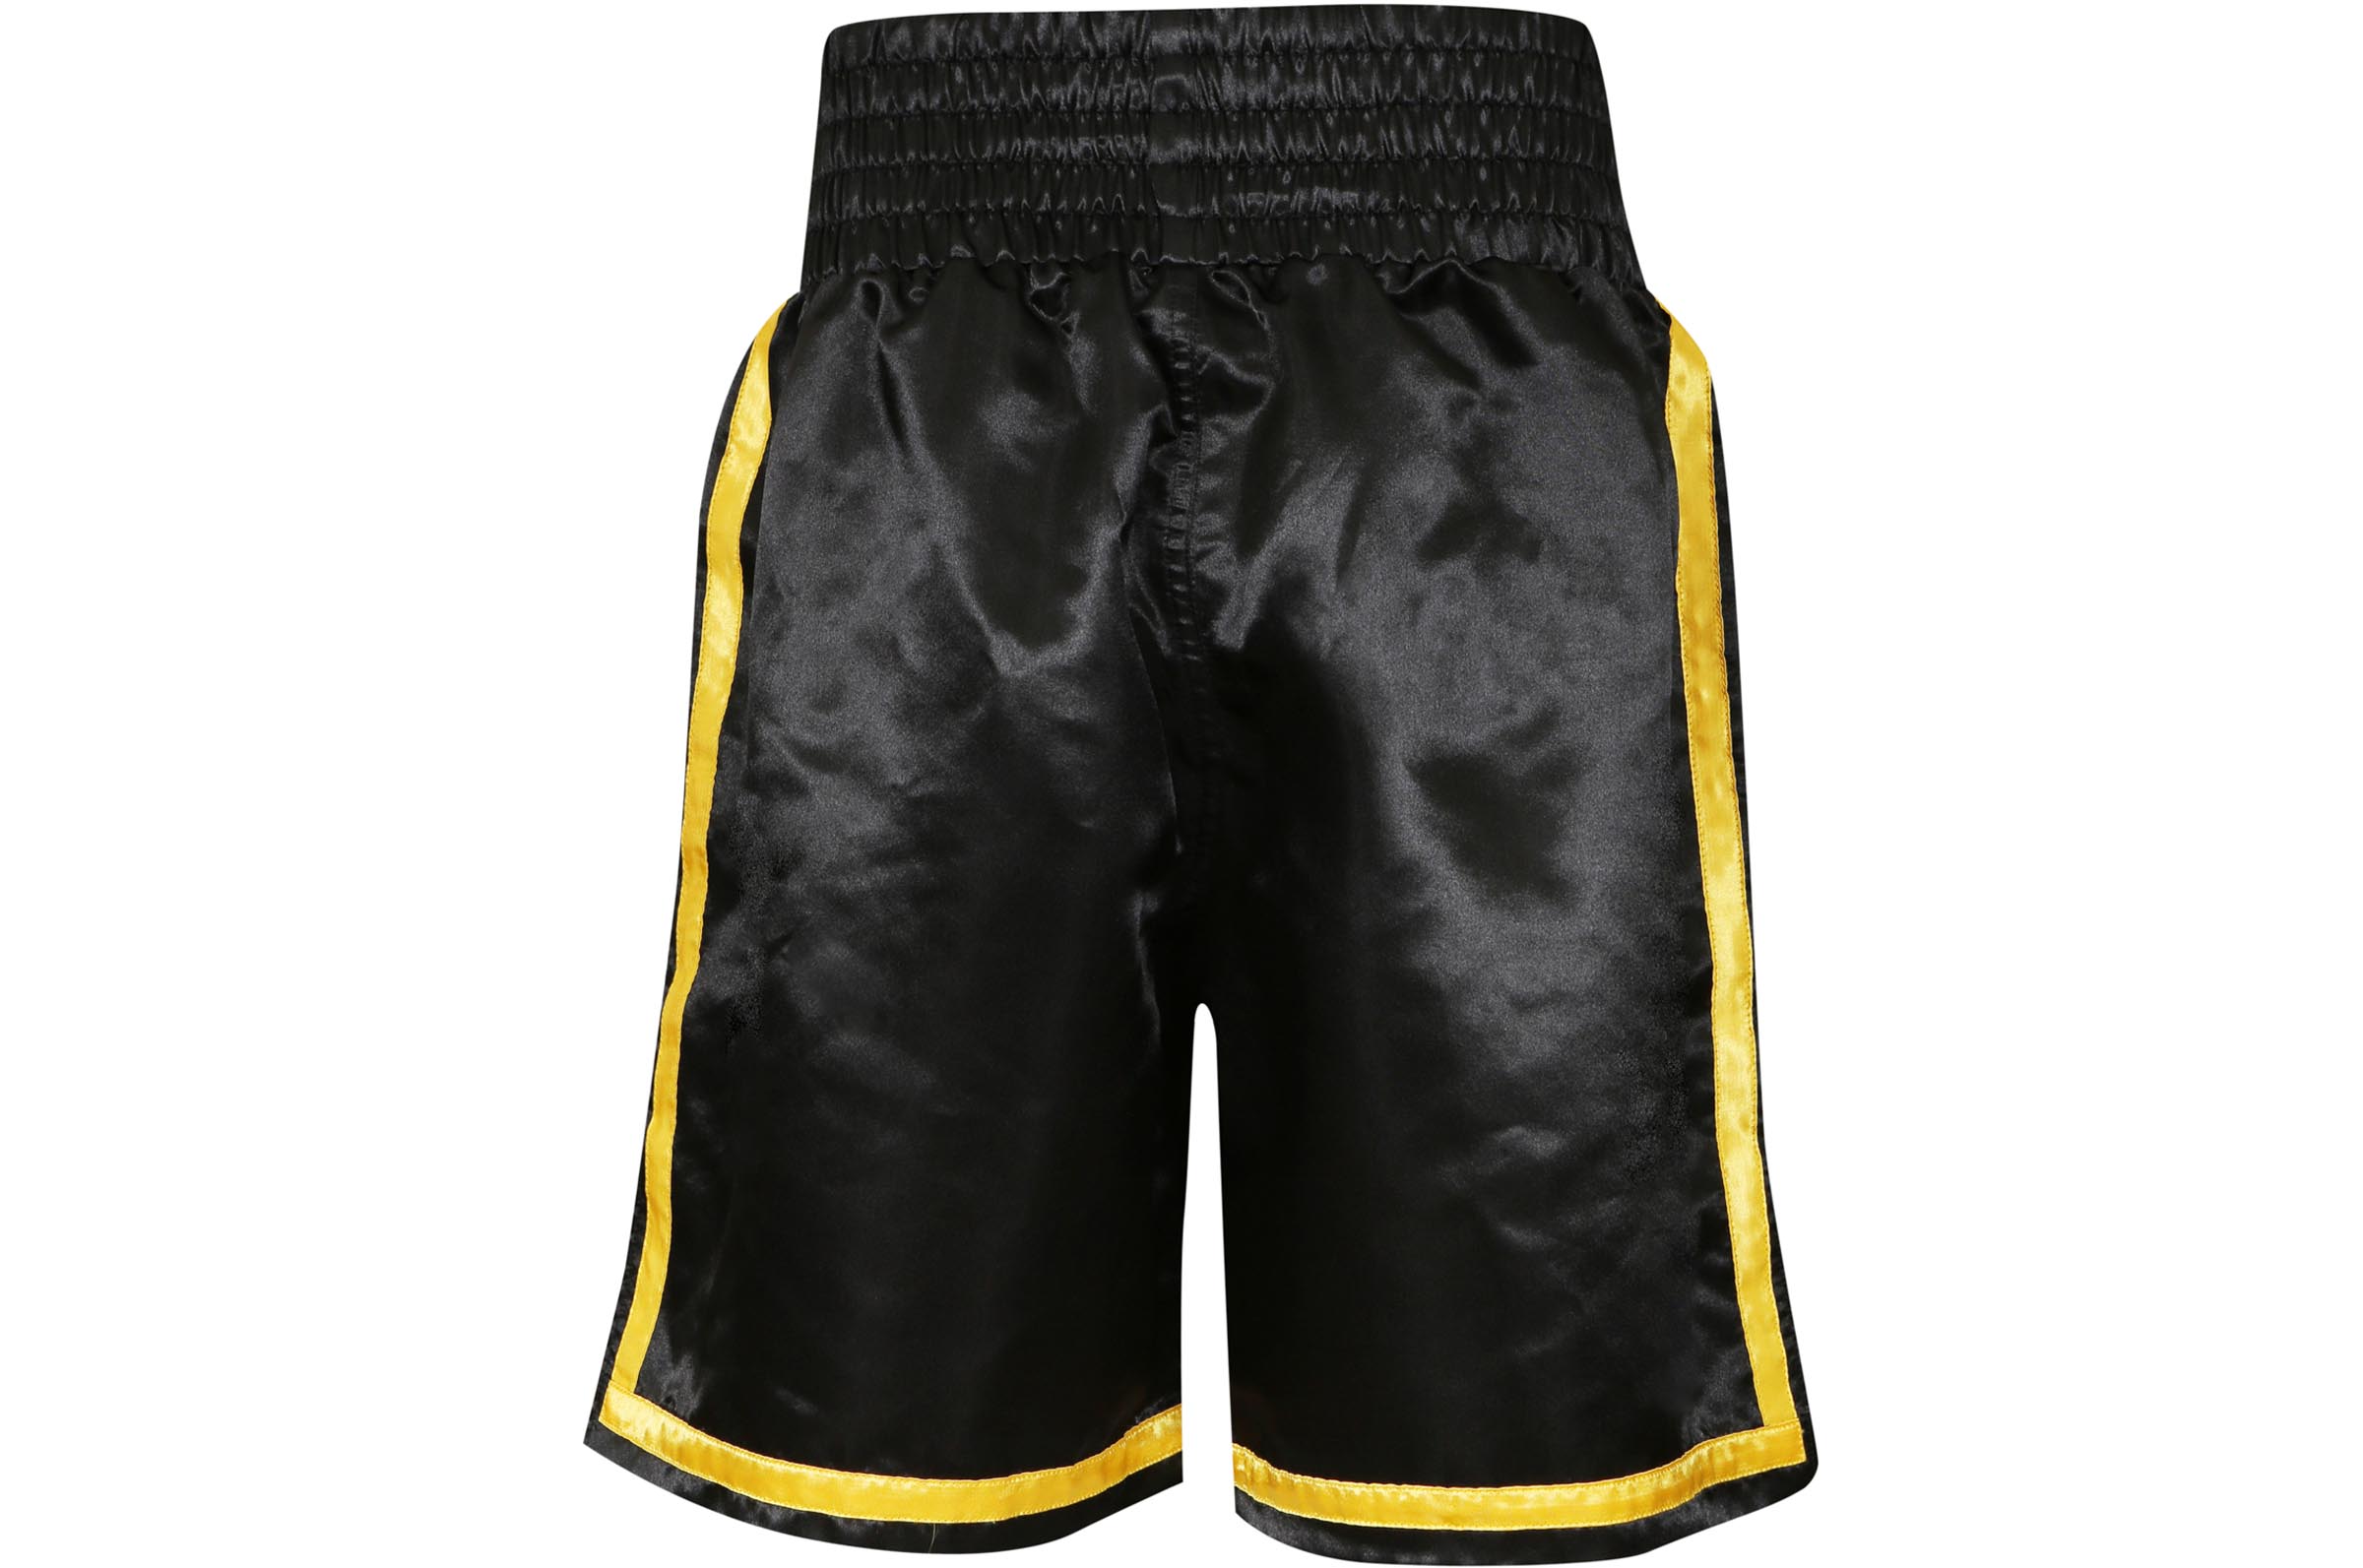 Pantalon de box Multiboxing gold - Indumentaria para artes marciales